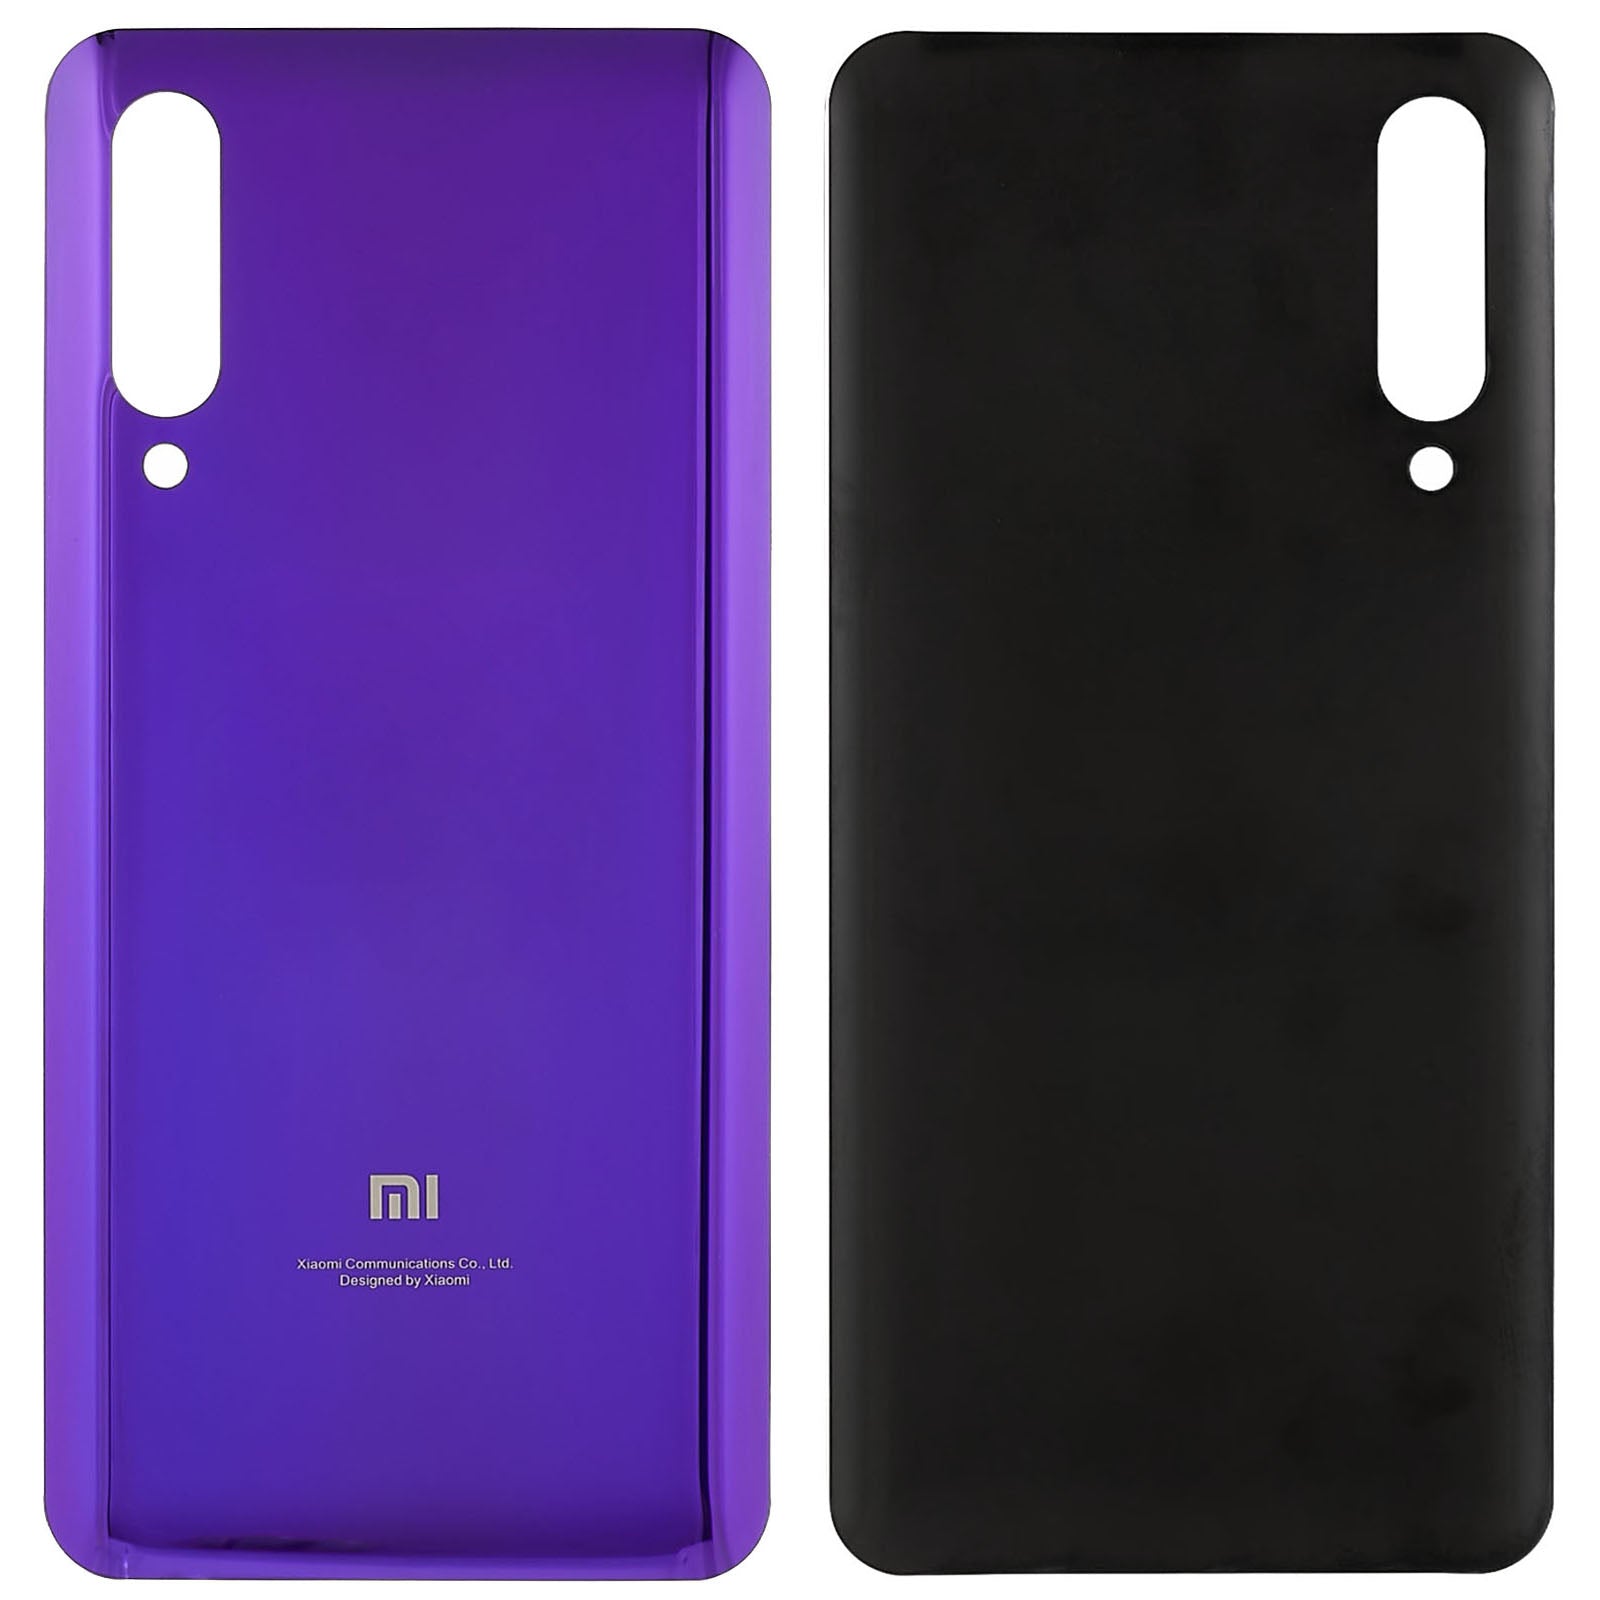 Battery Door Housing Back Cover Replacement for Xiaomi Mi 9 - Light Purple